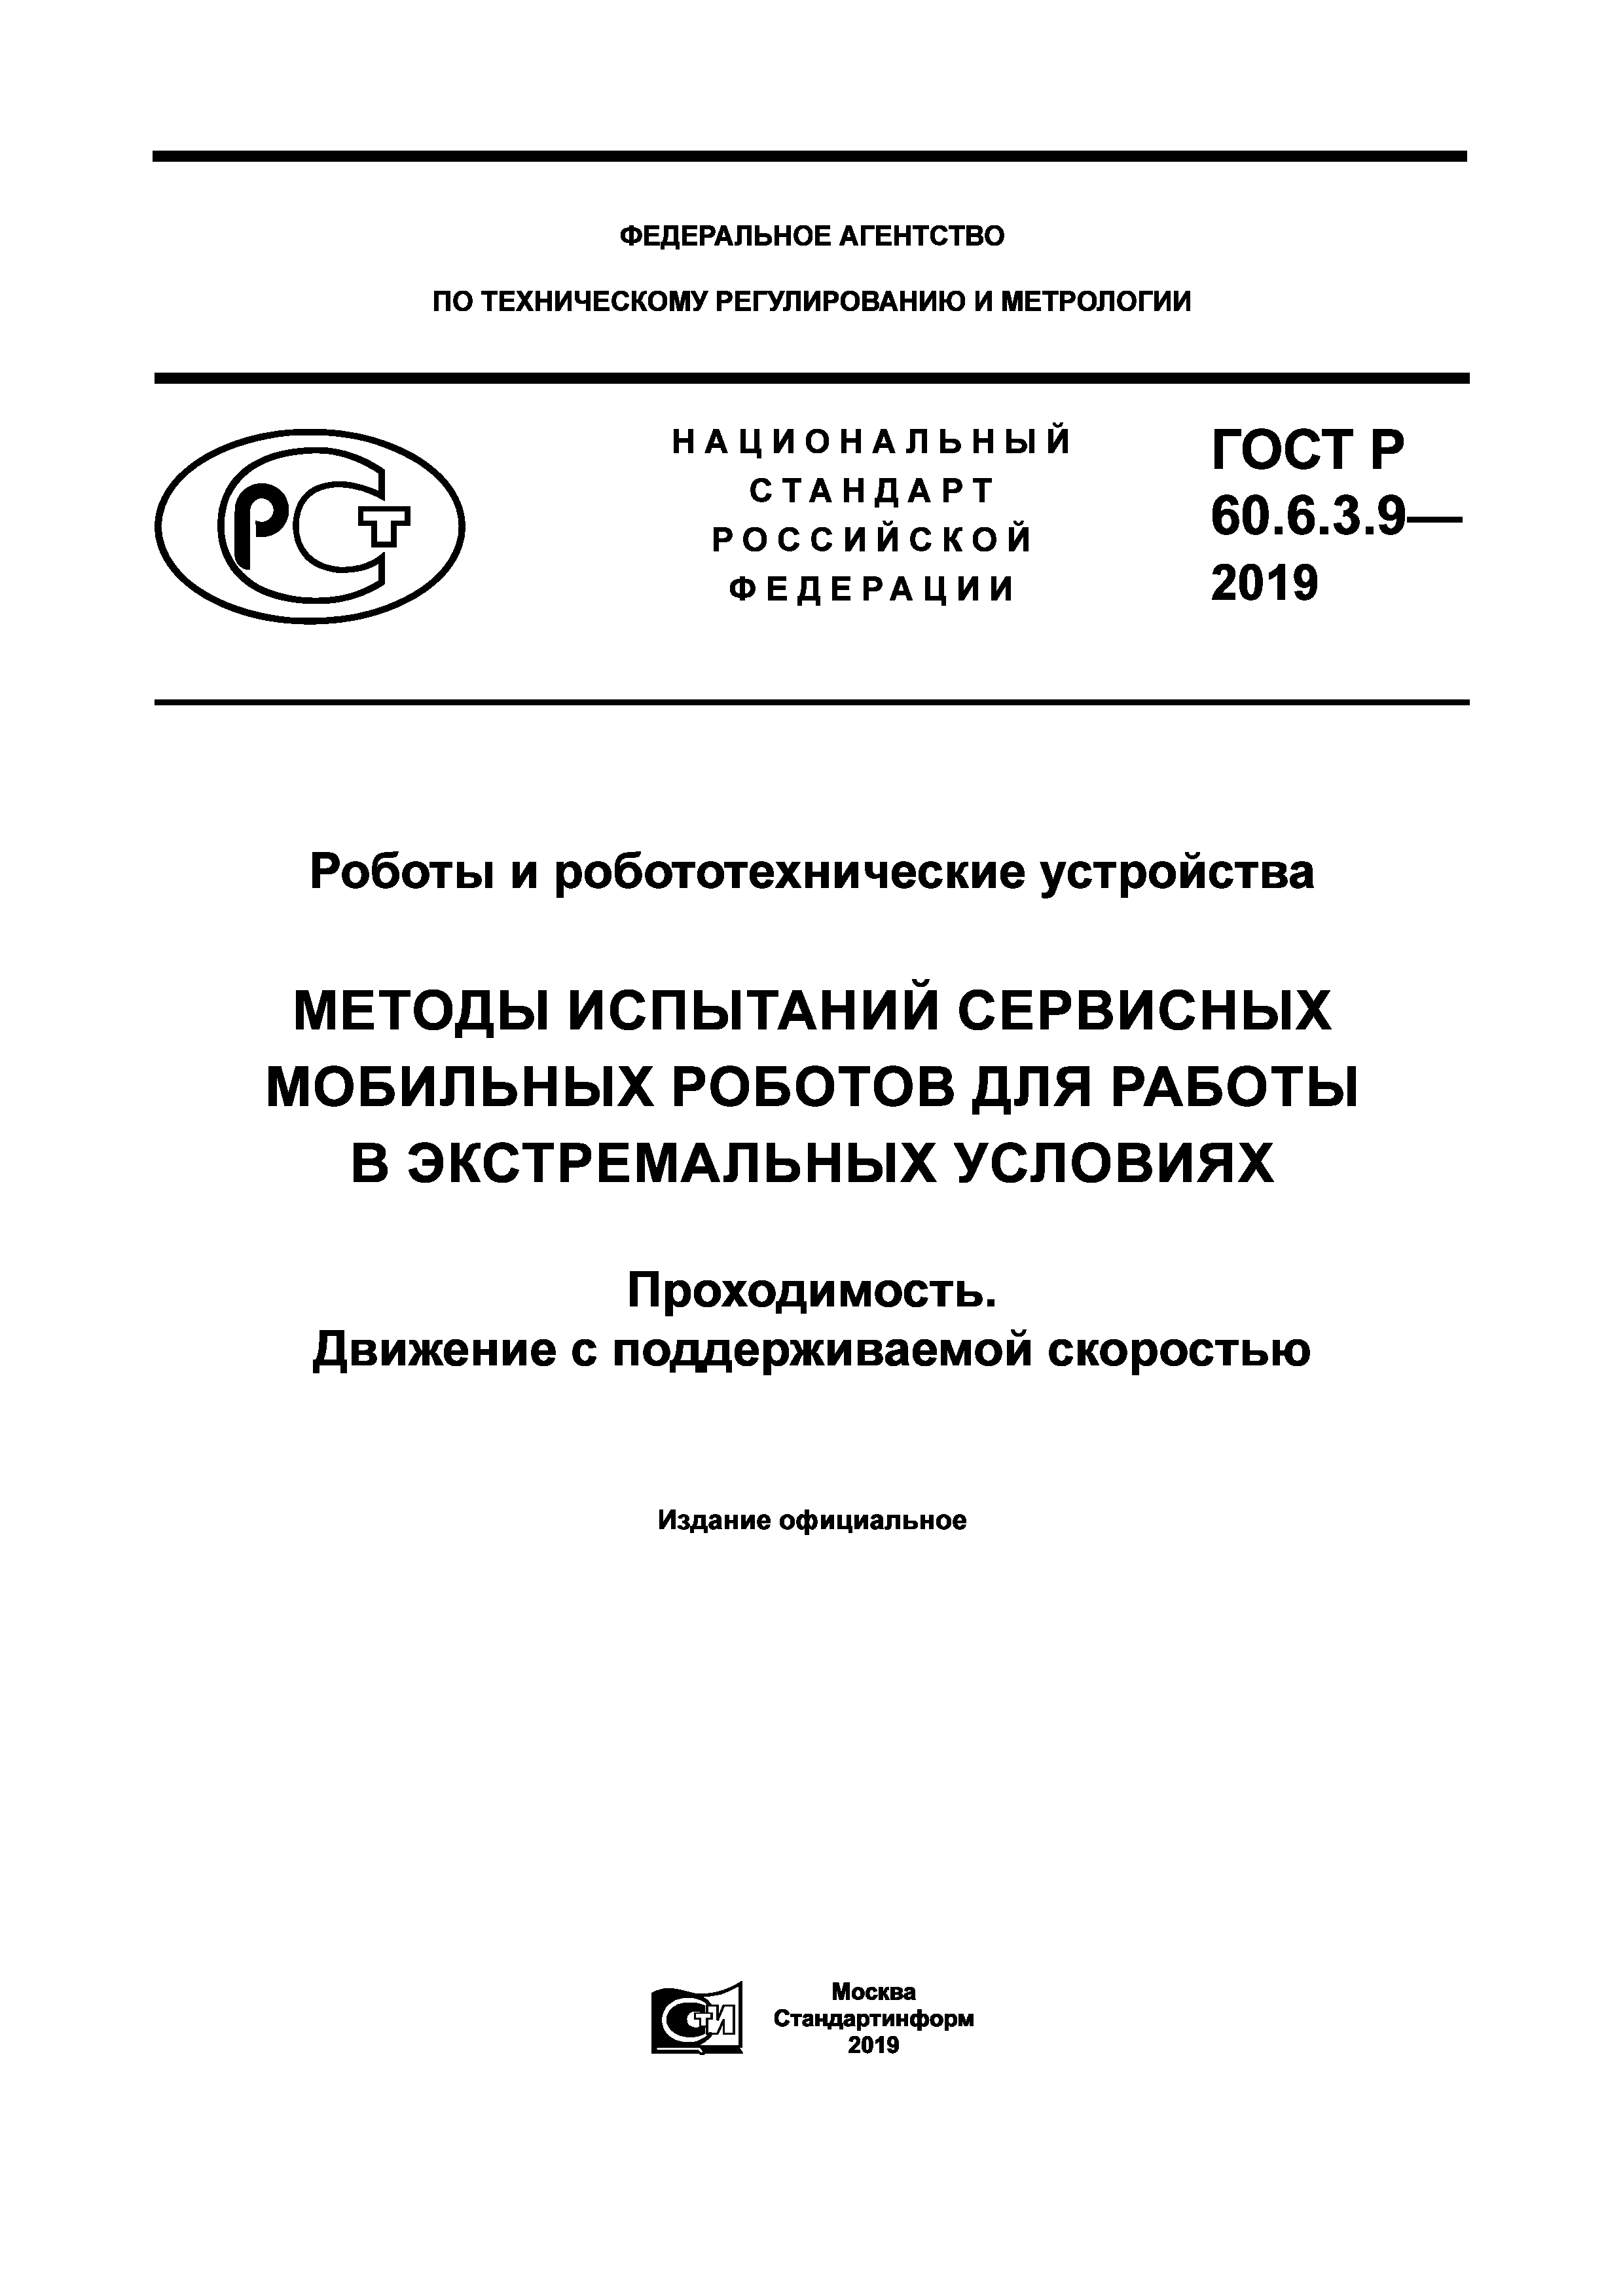 ГОСТ Р 60.6.3.9-2019